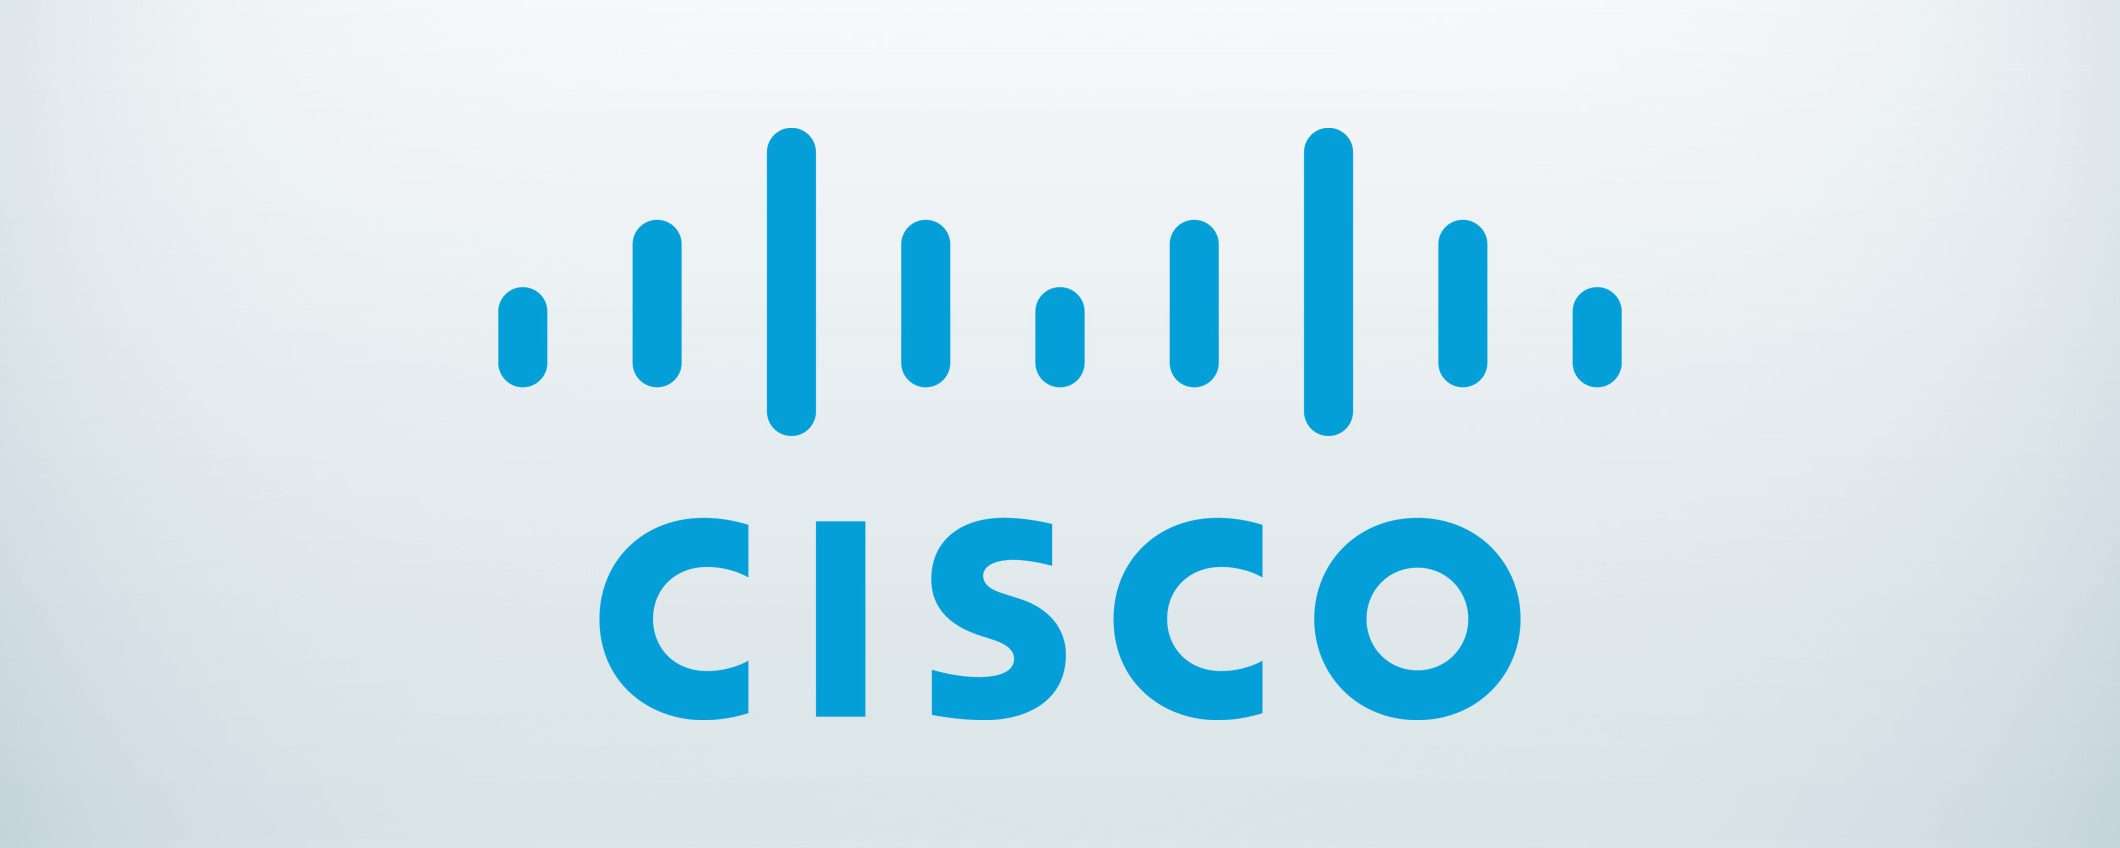 Cisco IOS XE: grave vulnerabilità nella Web UI (update)